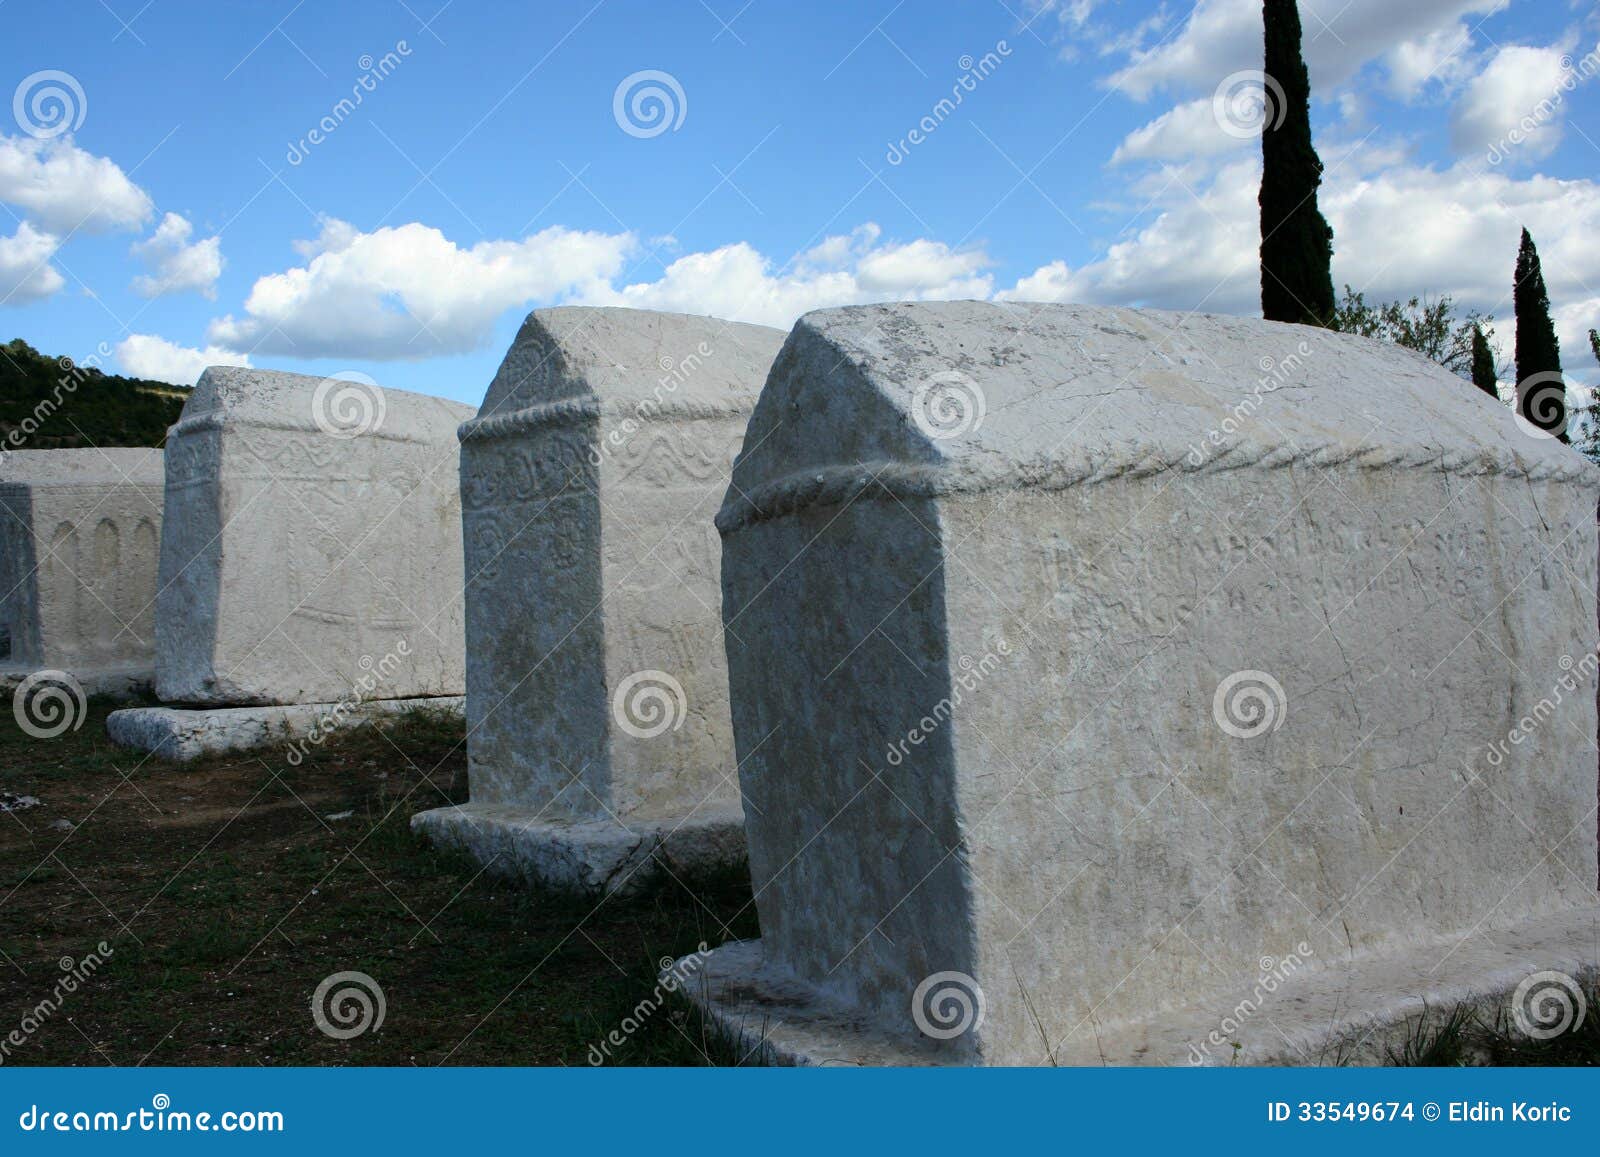 medieval tombstones